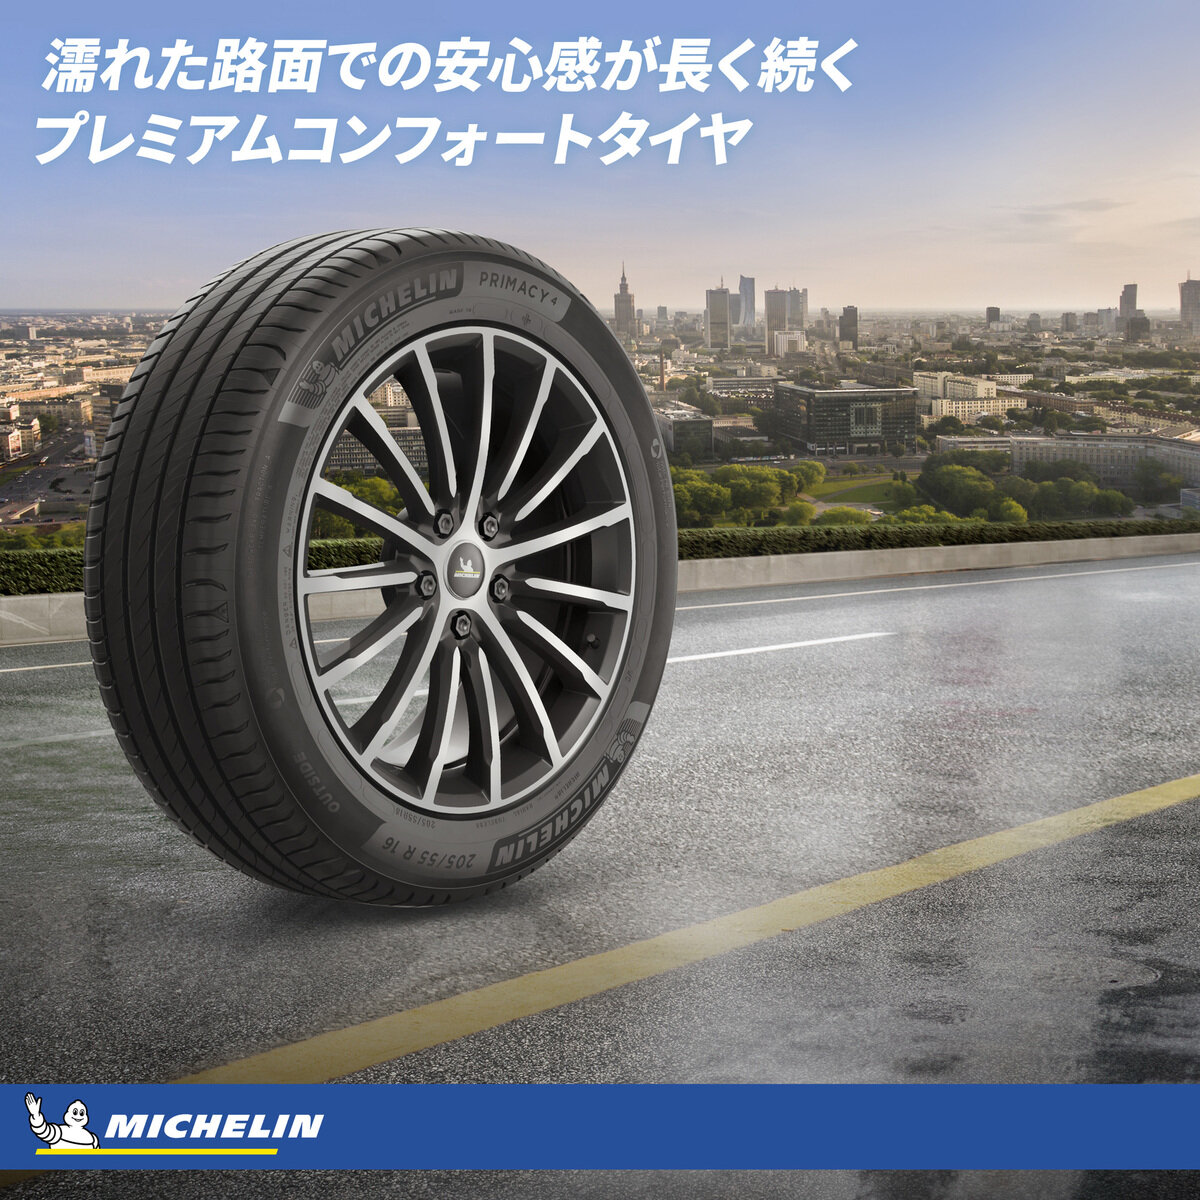 Michelin 205/50 R17 93W XL TL PRIMACY 4+ MI Costco Japan